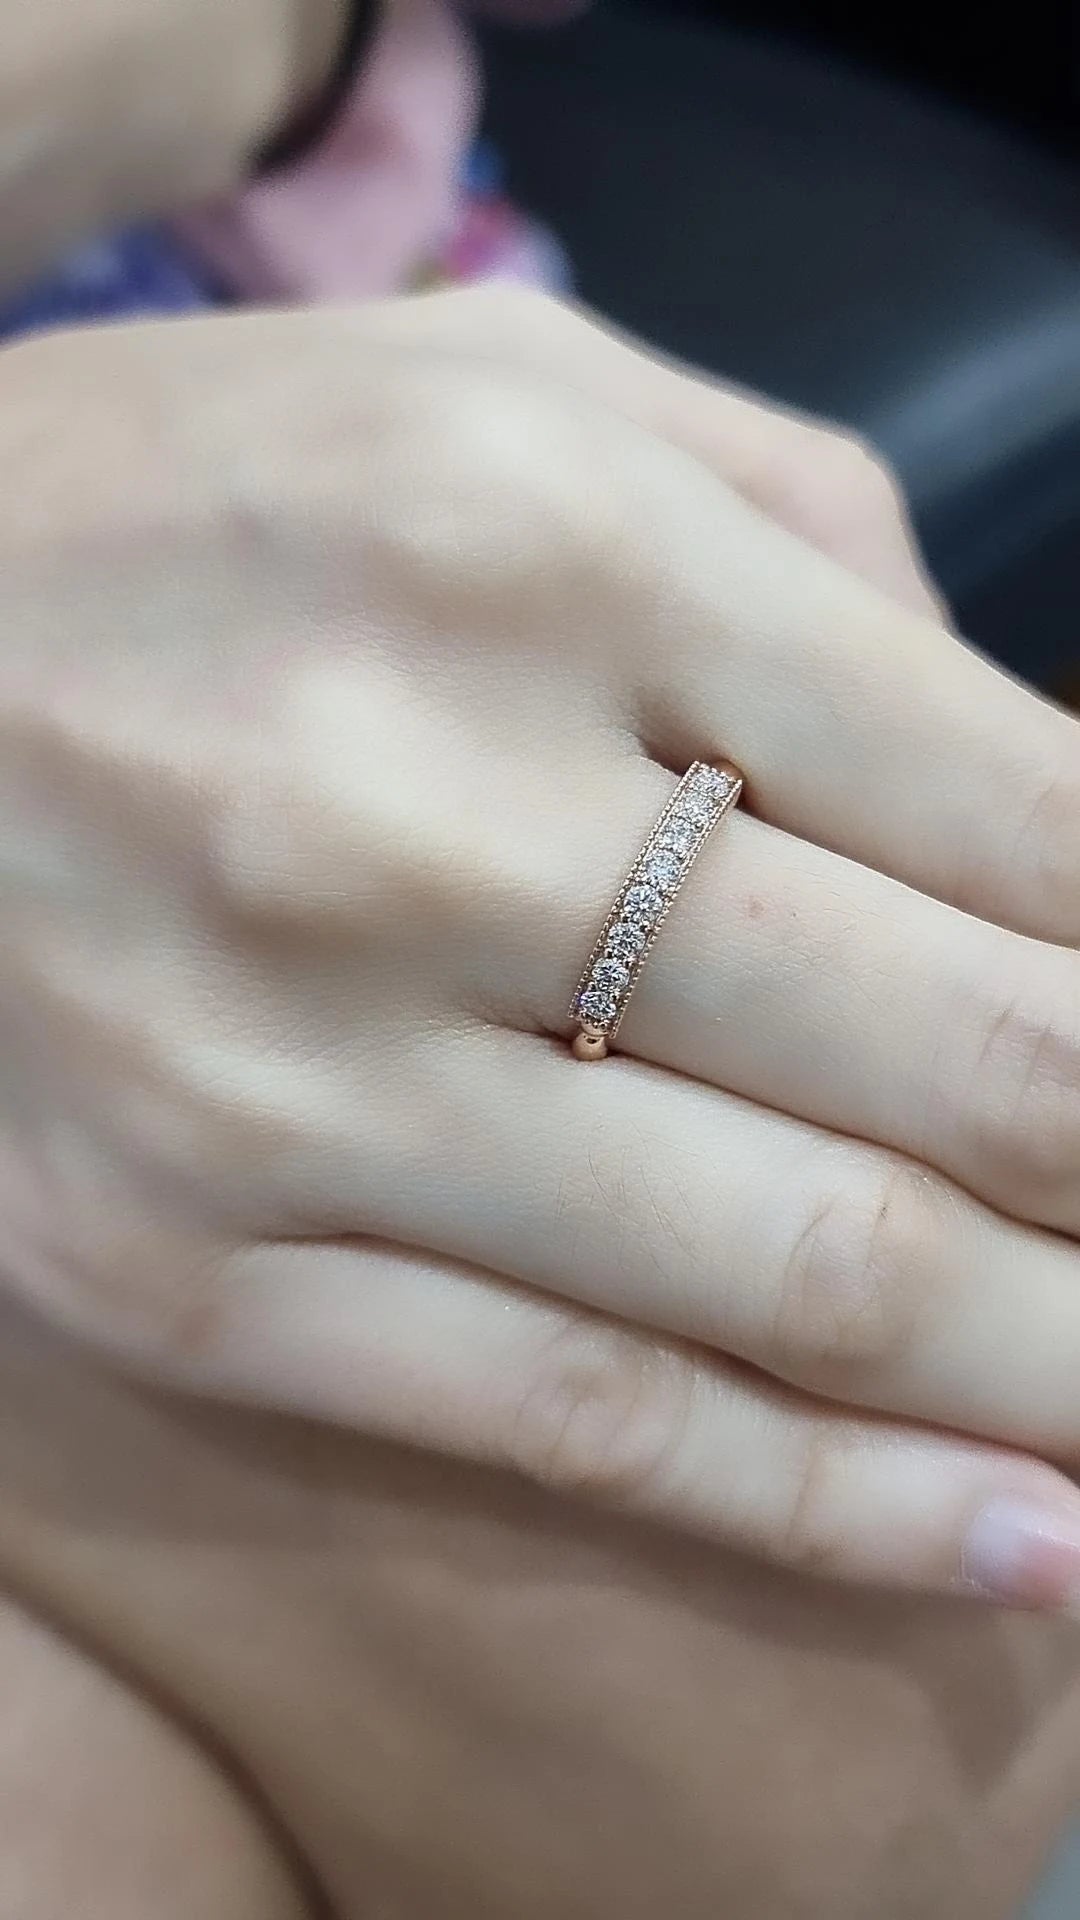 Half Eternity Diamond Ring, Wedding Ring, Fashion Ring In 18k Rose Gold.